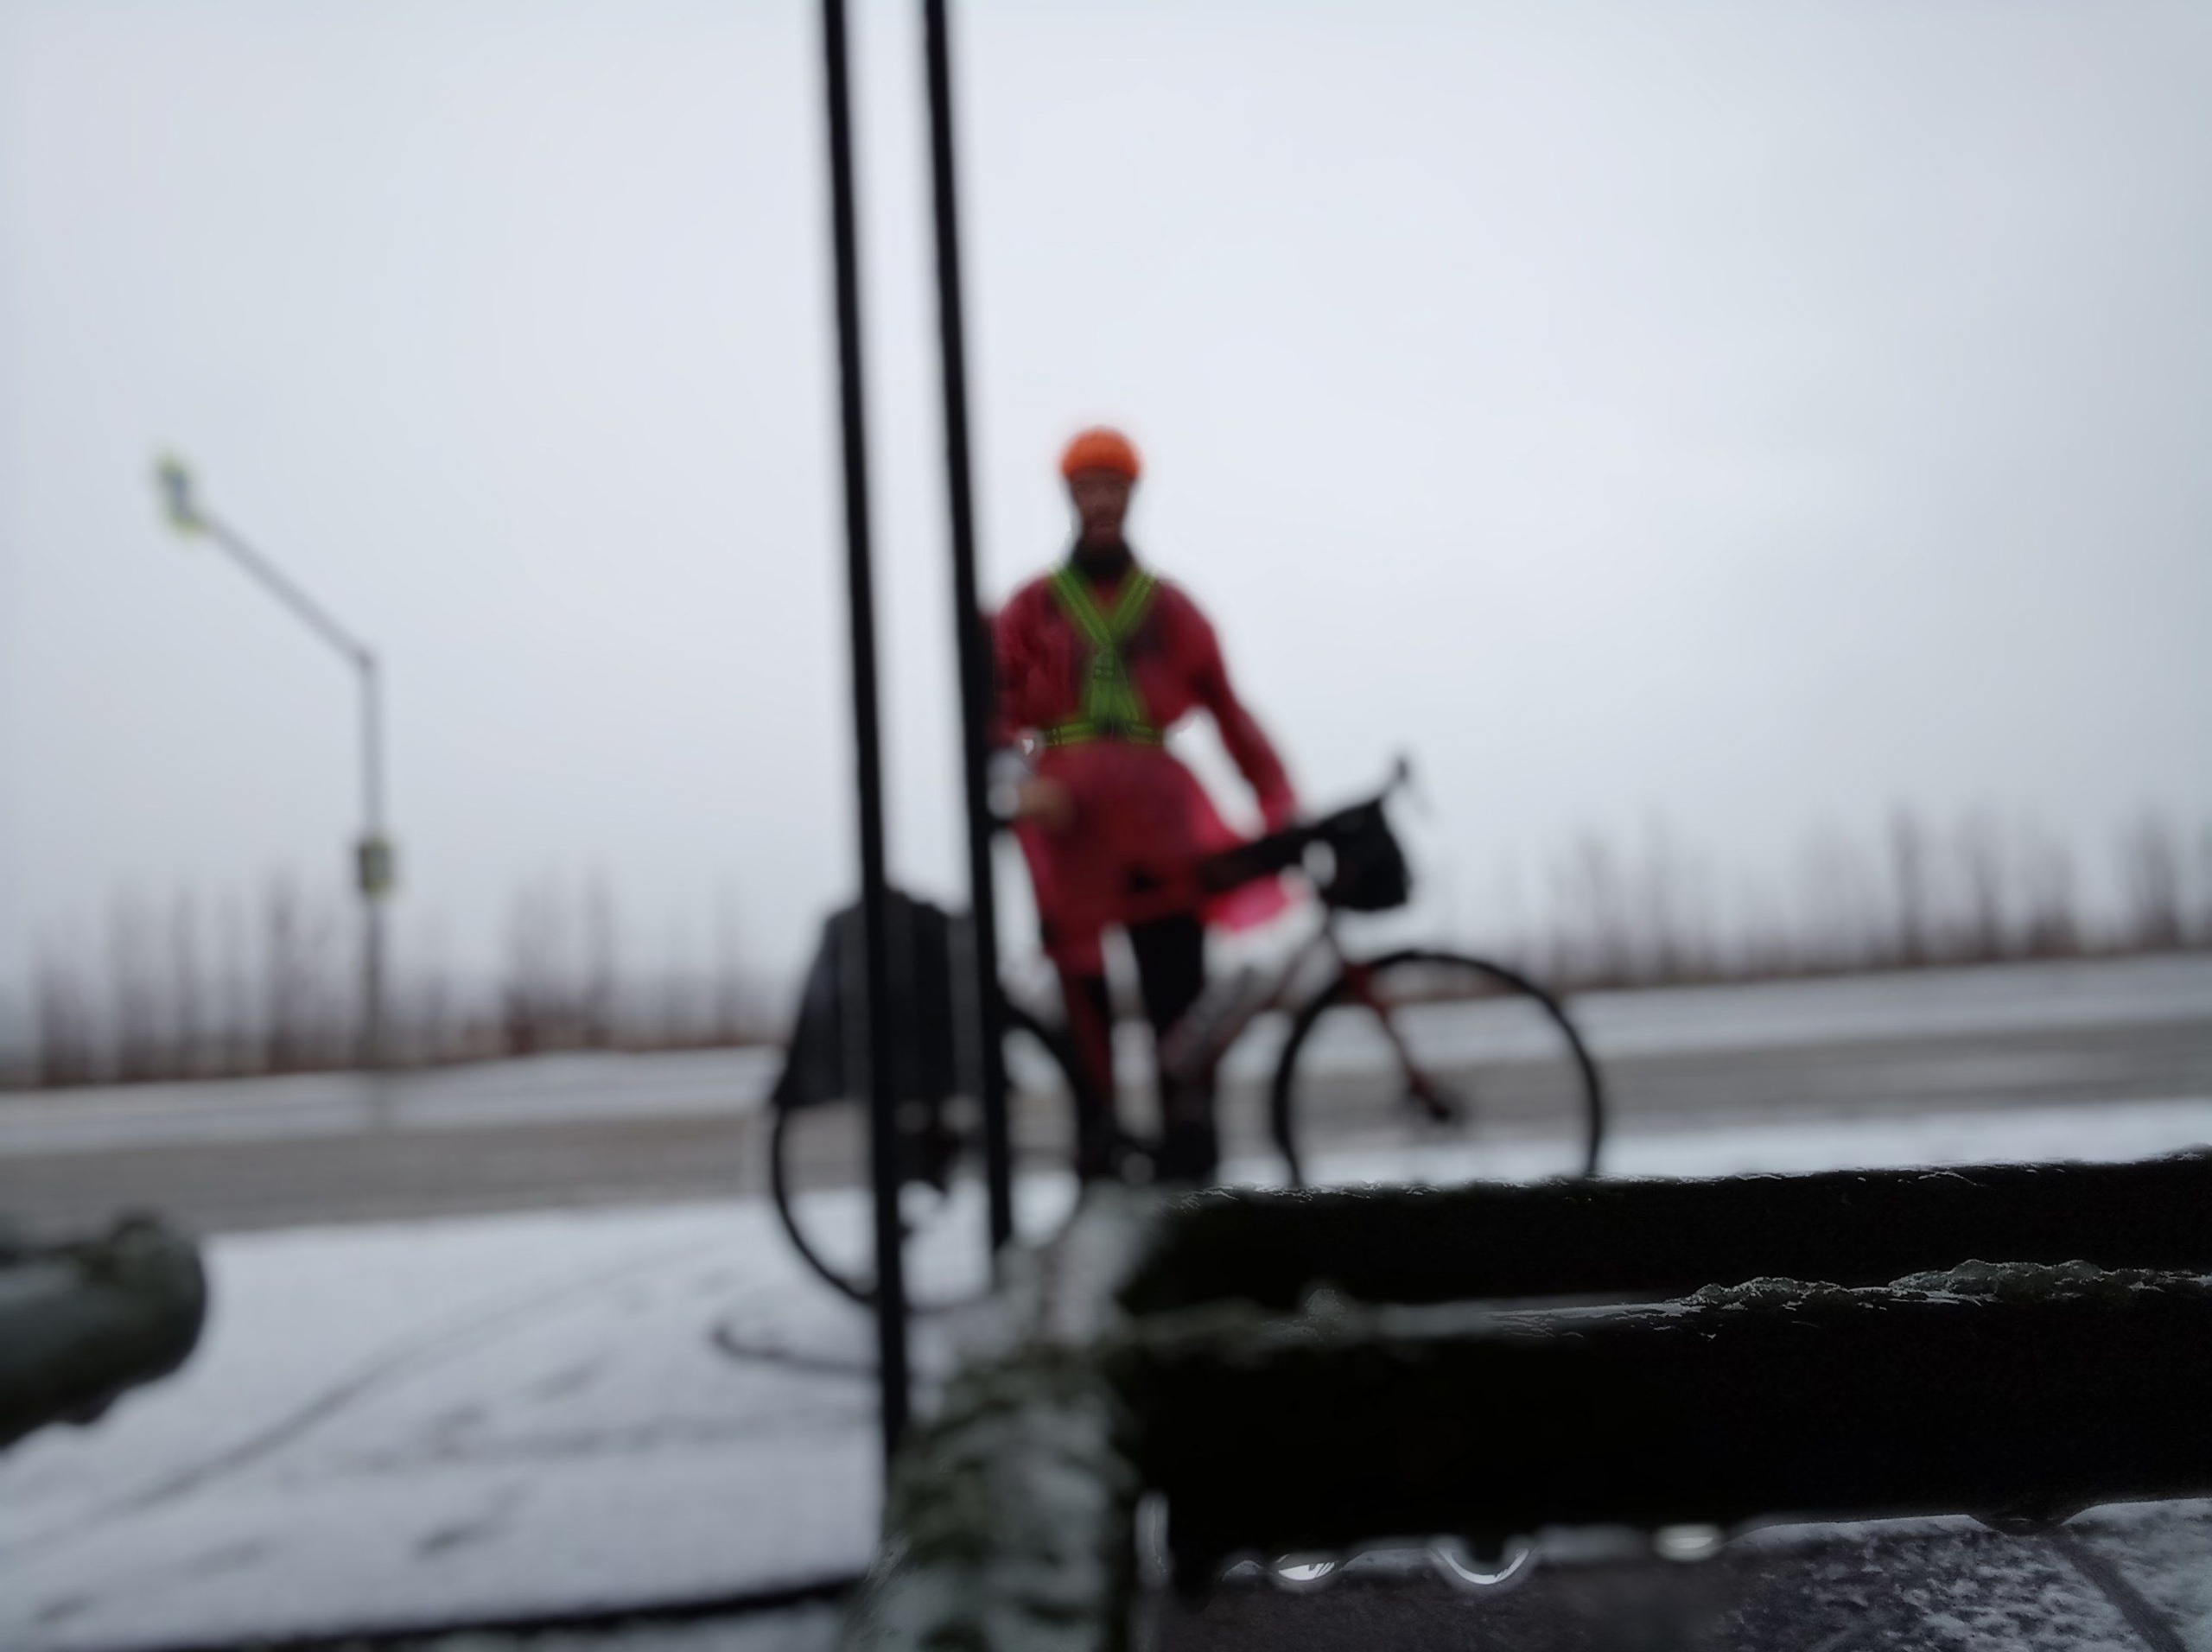 Марат Костин проехал 700 километров из Оренбурга до Казани на велосипеде